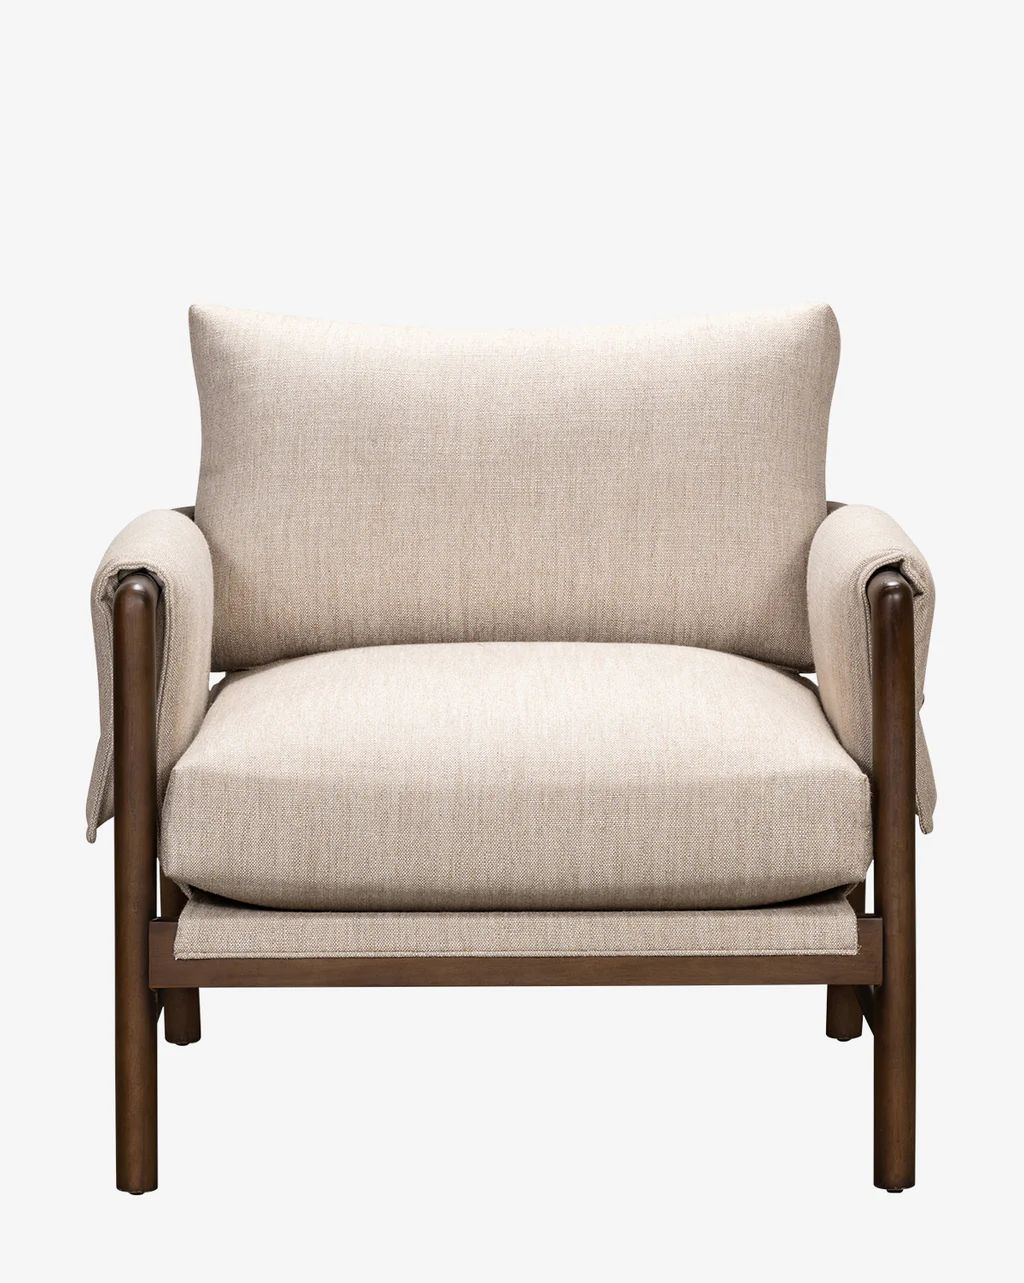 Demarco Lounge Chair | McGee & Co.